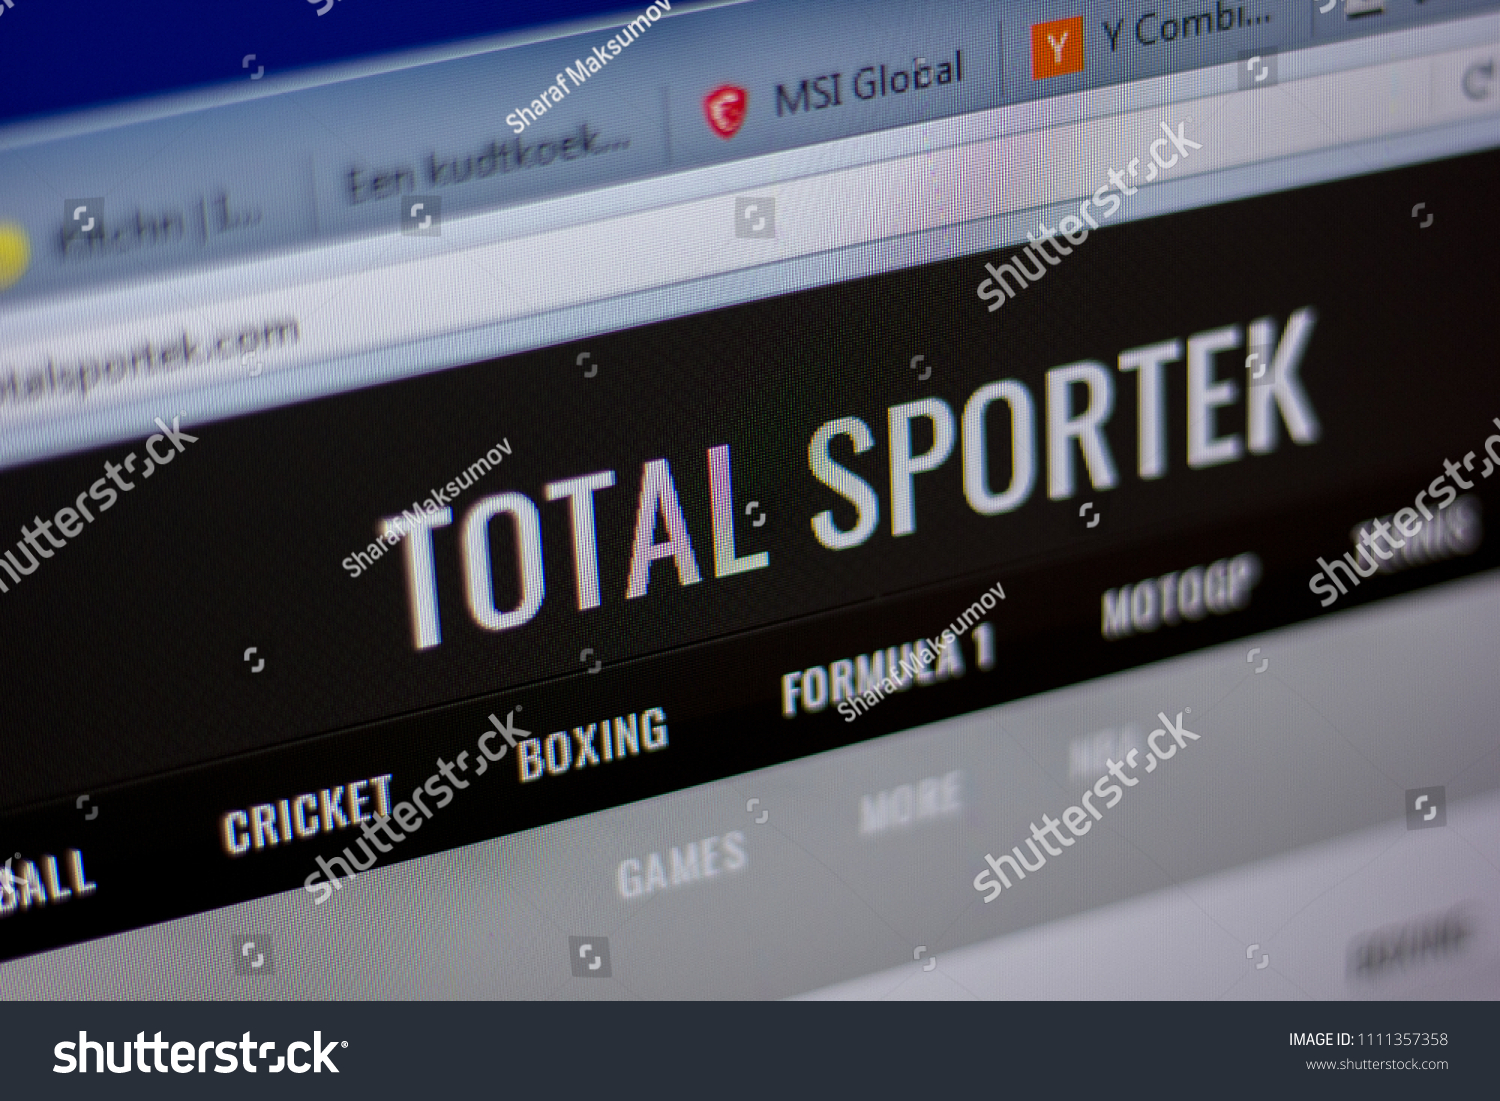 Totalsportek Total Sports